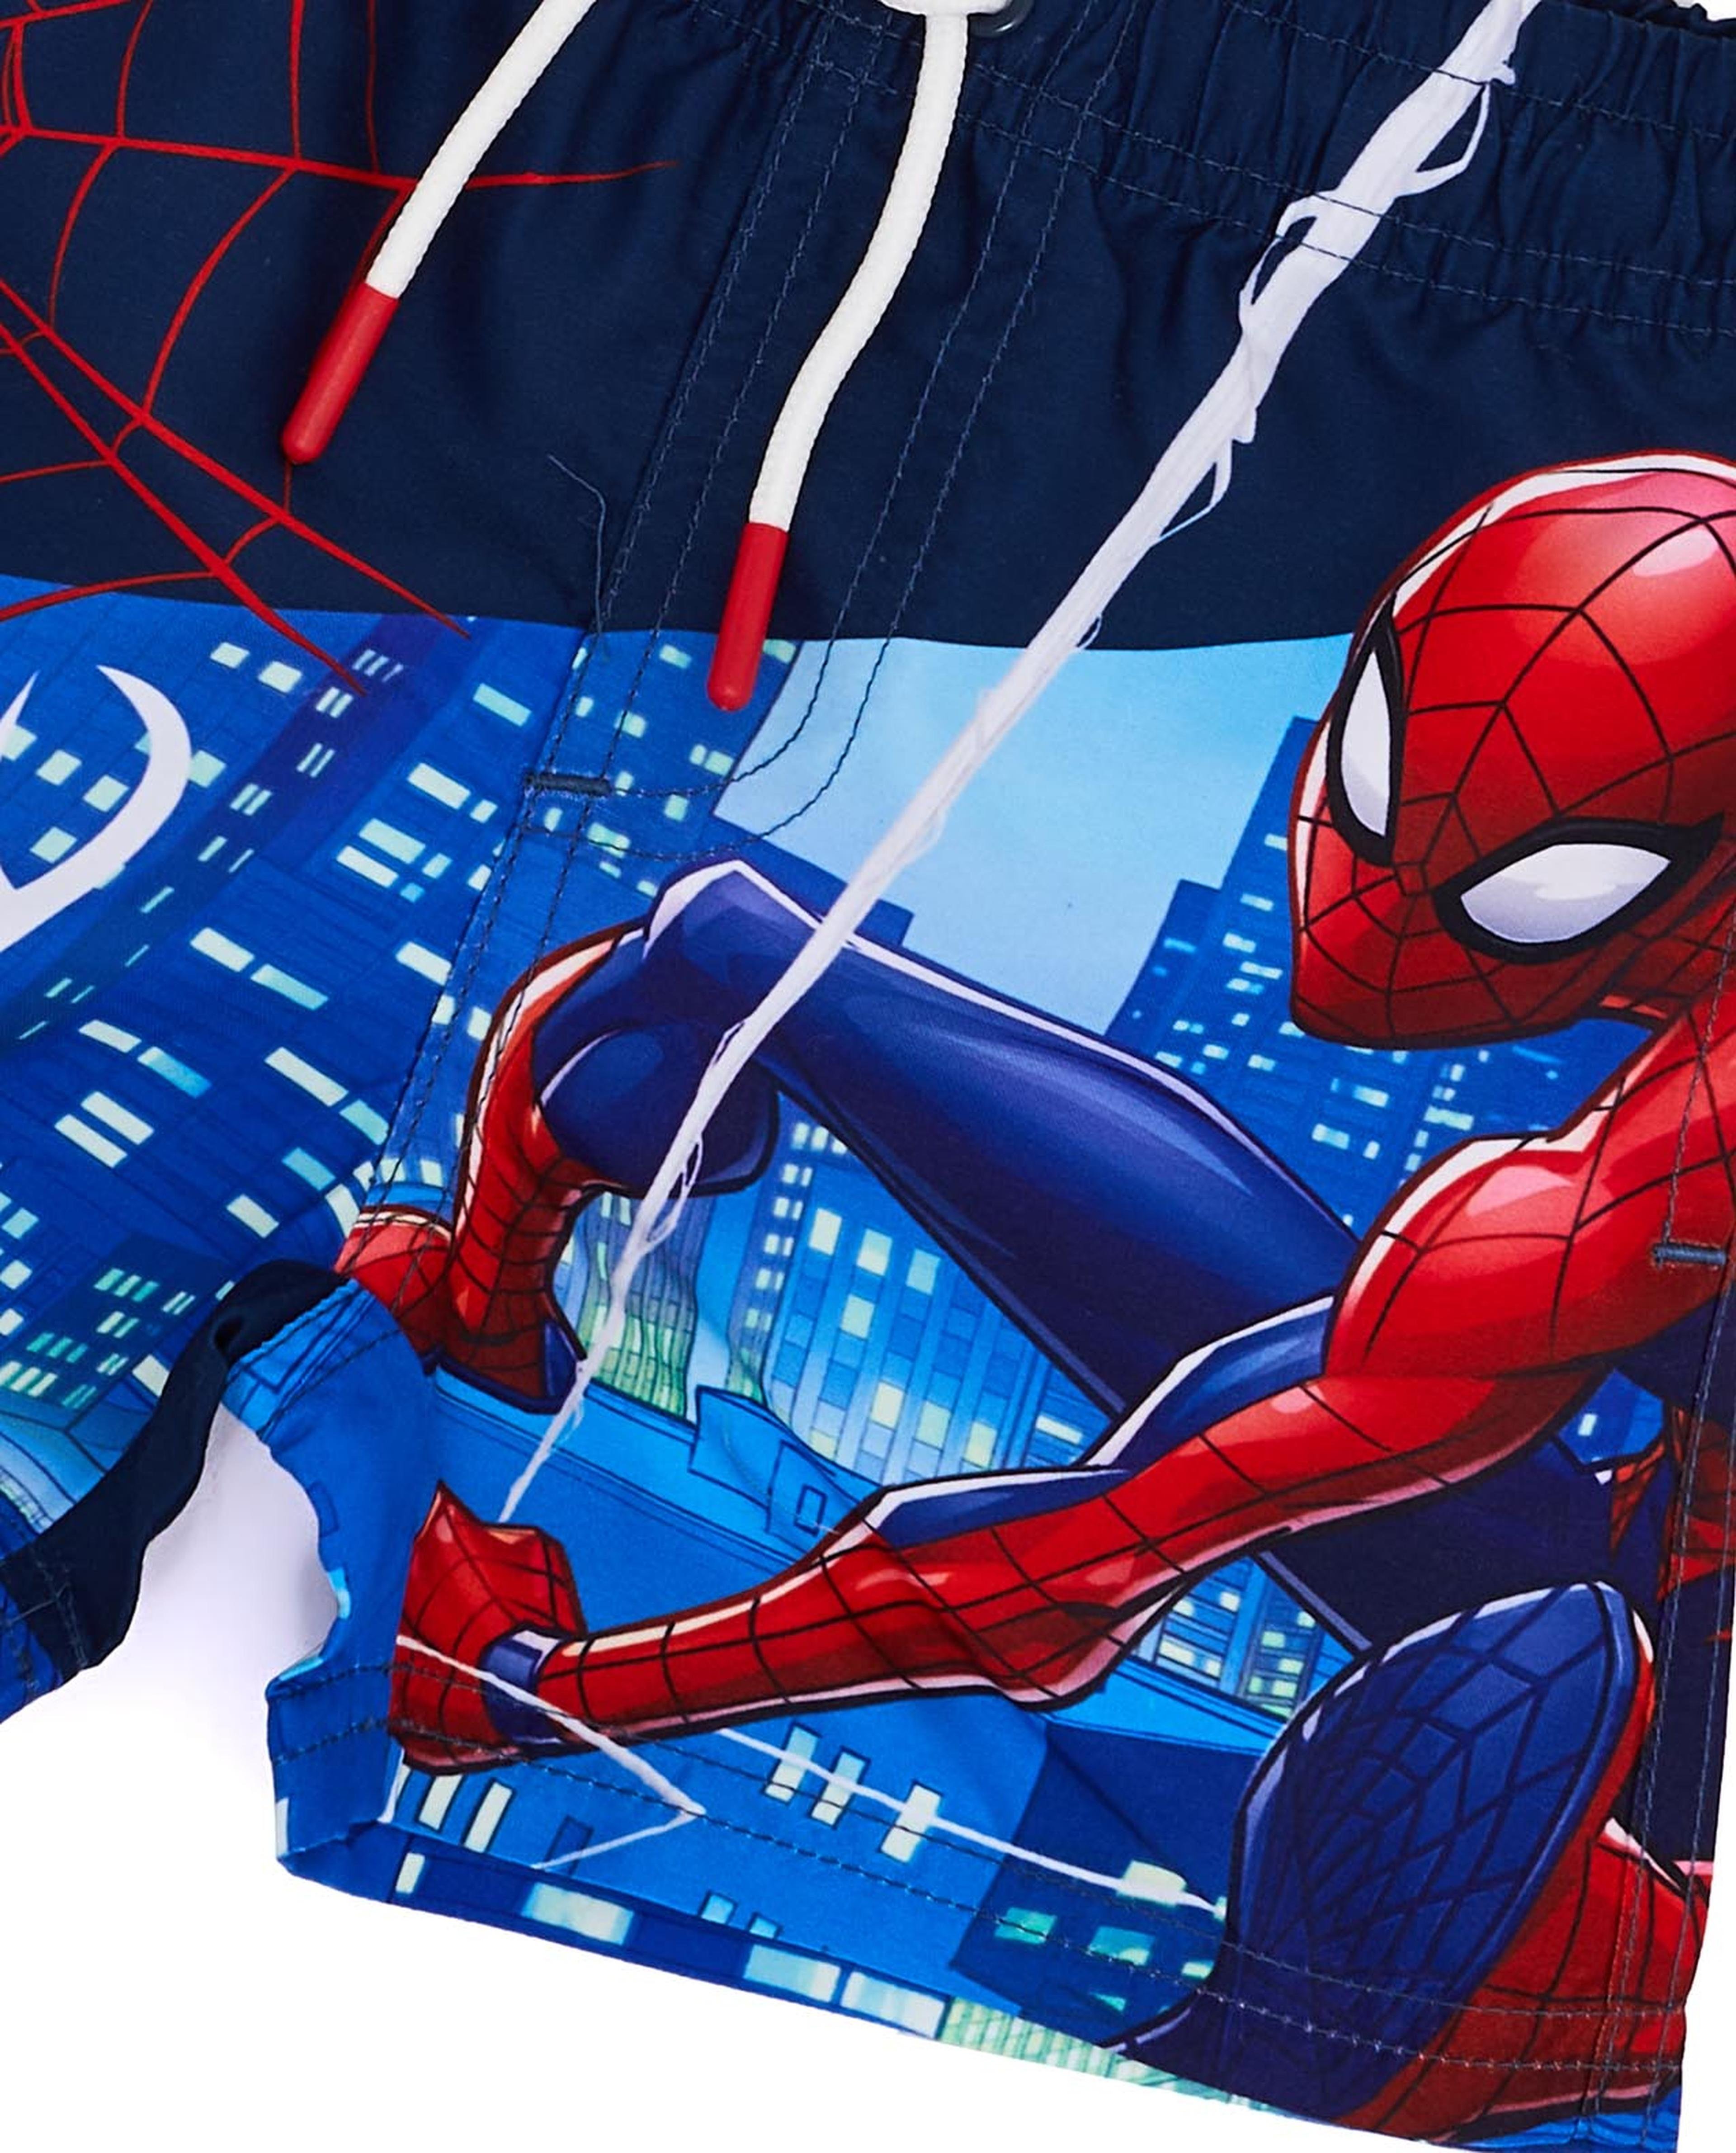 Spider-Man Print Swim Shorts with Drawstring Waist